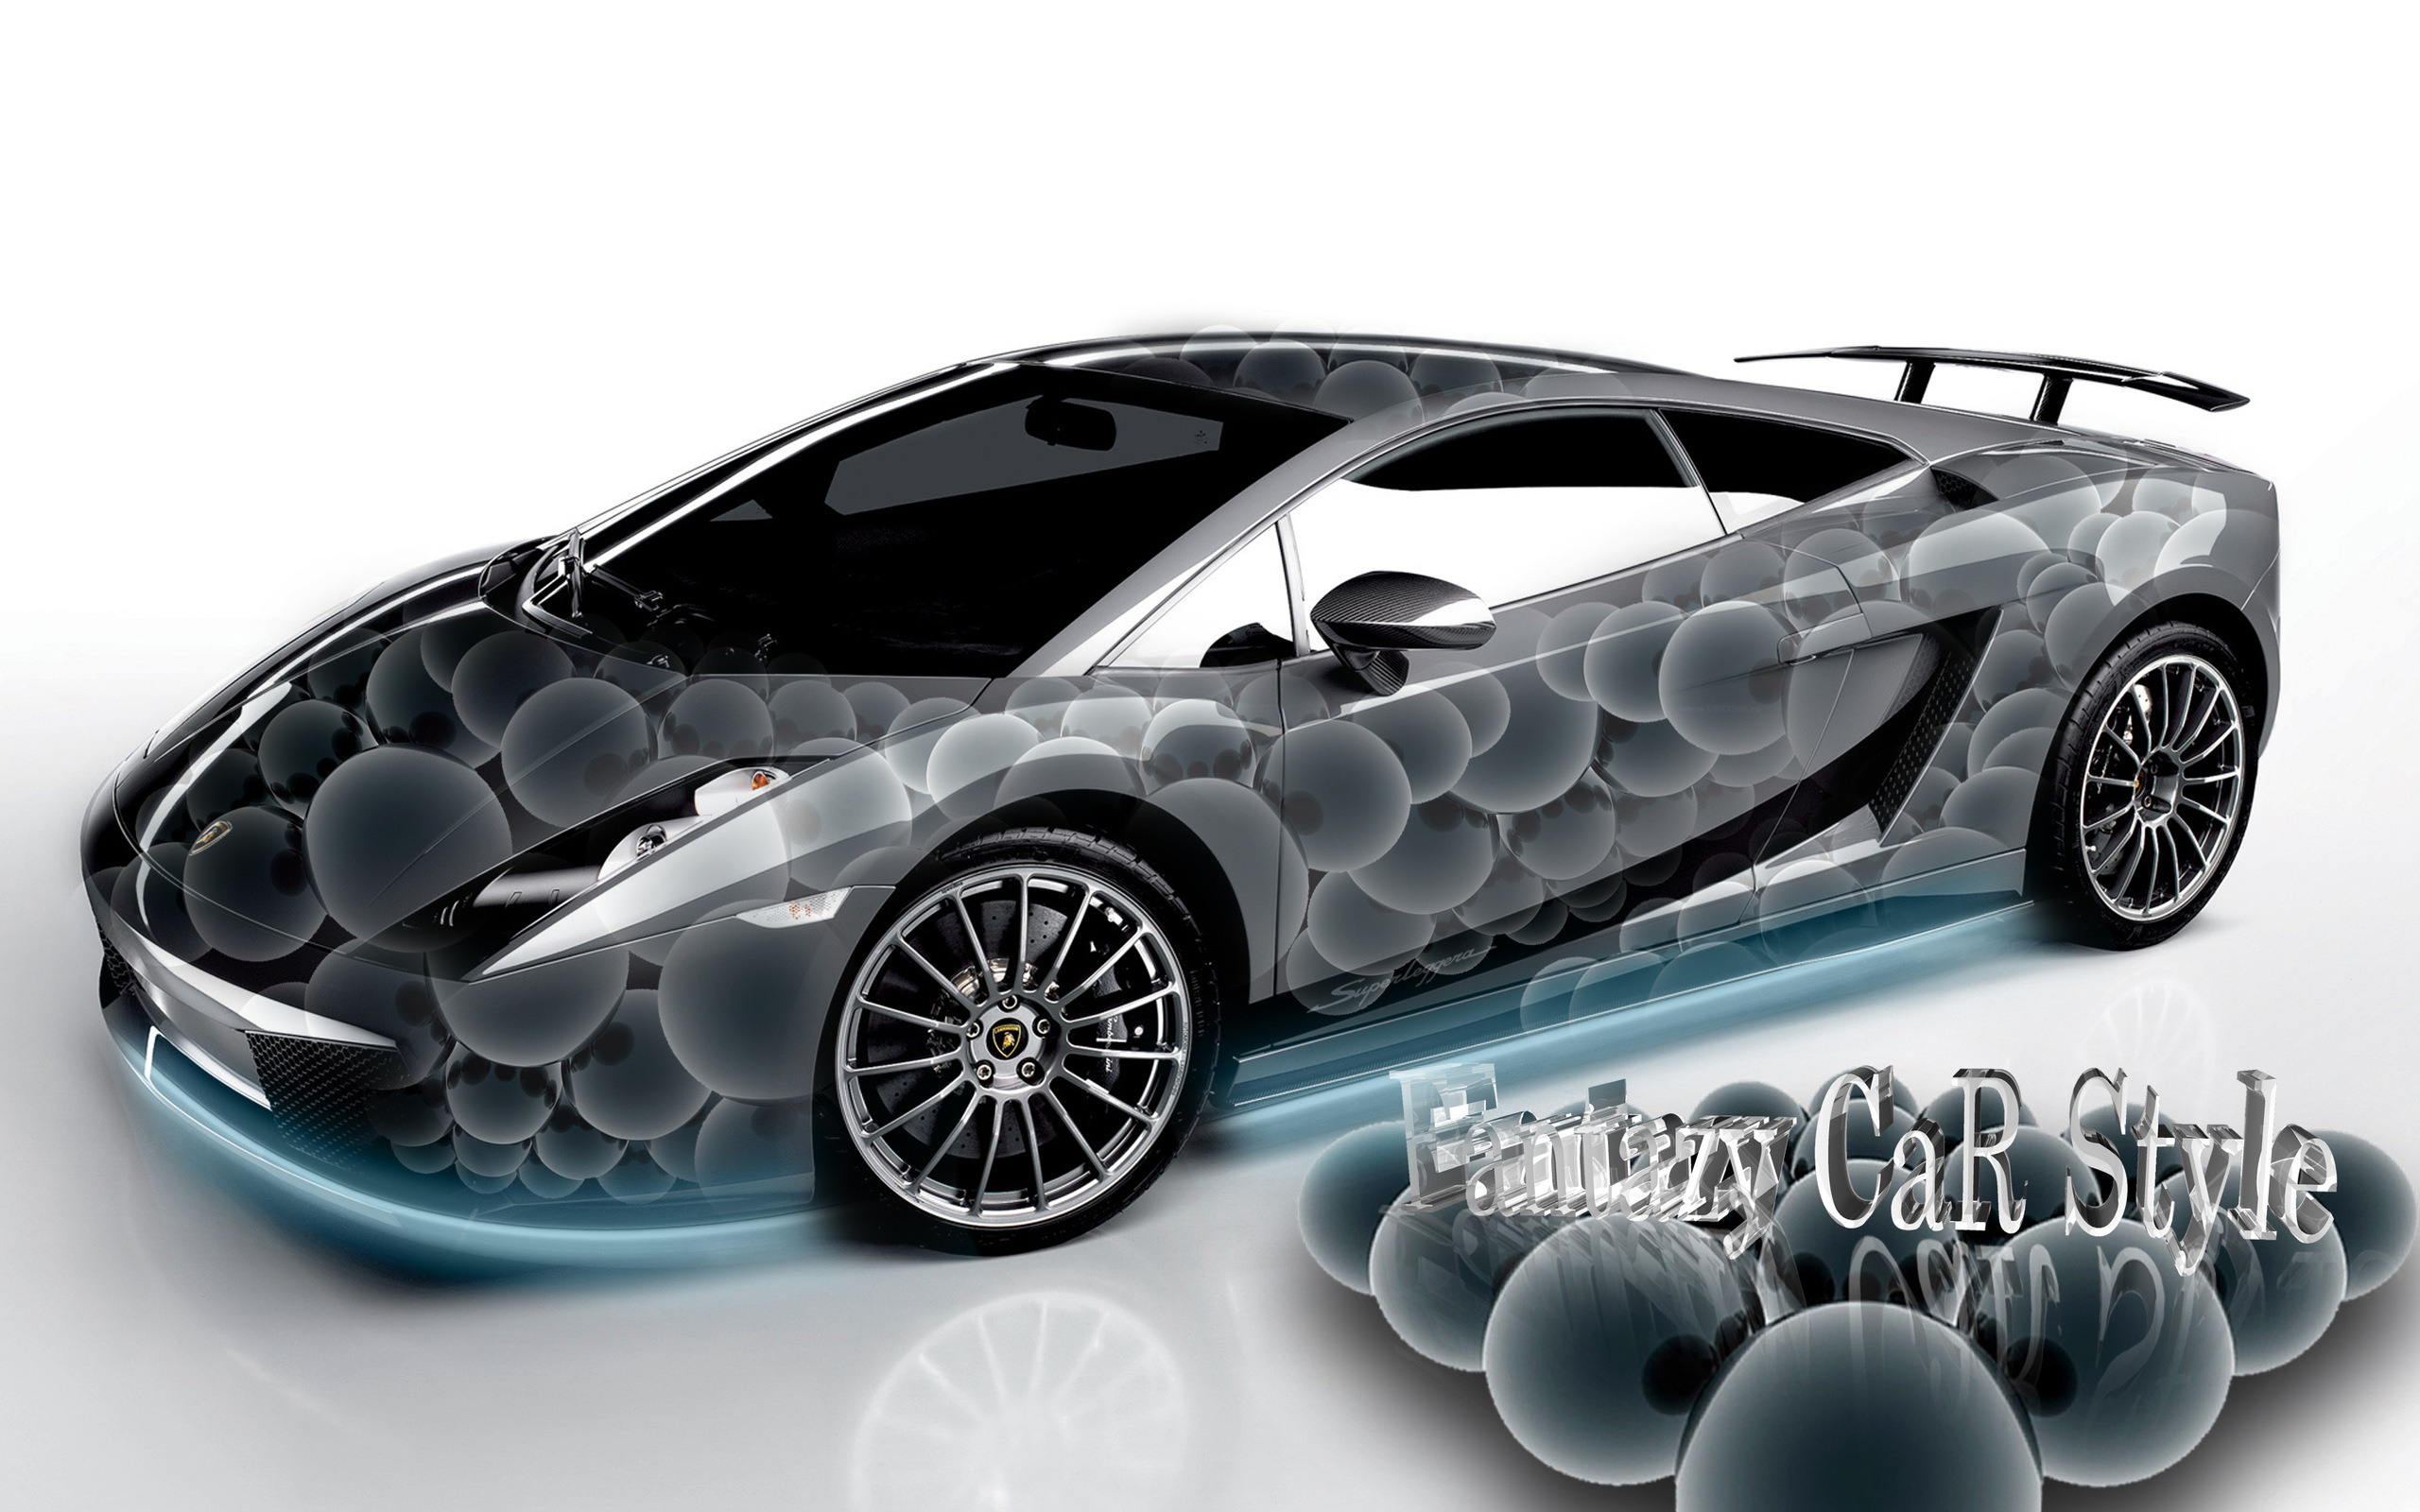 3d обои Фантазийная модель авто с шарами для боулинга (Fantazy Car Style)  шарики # 89252